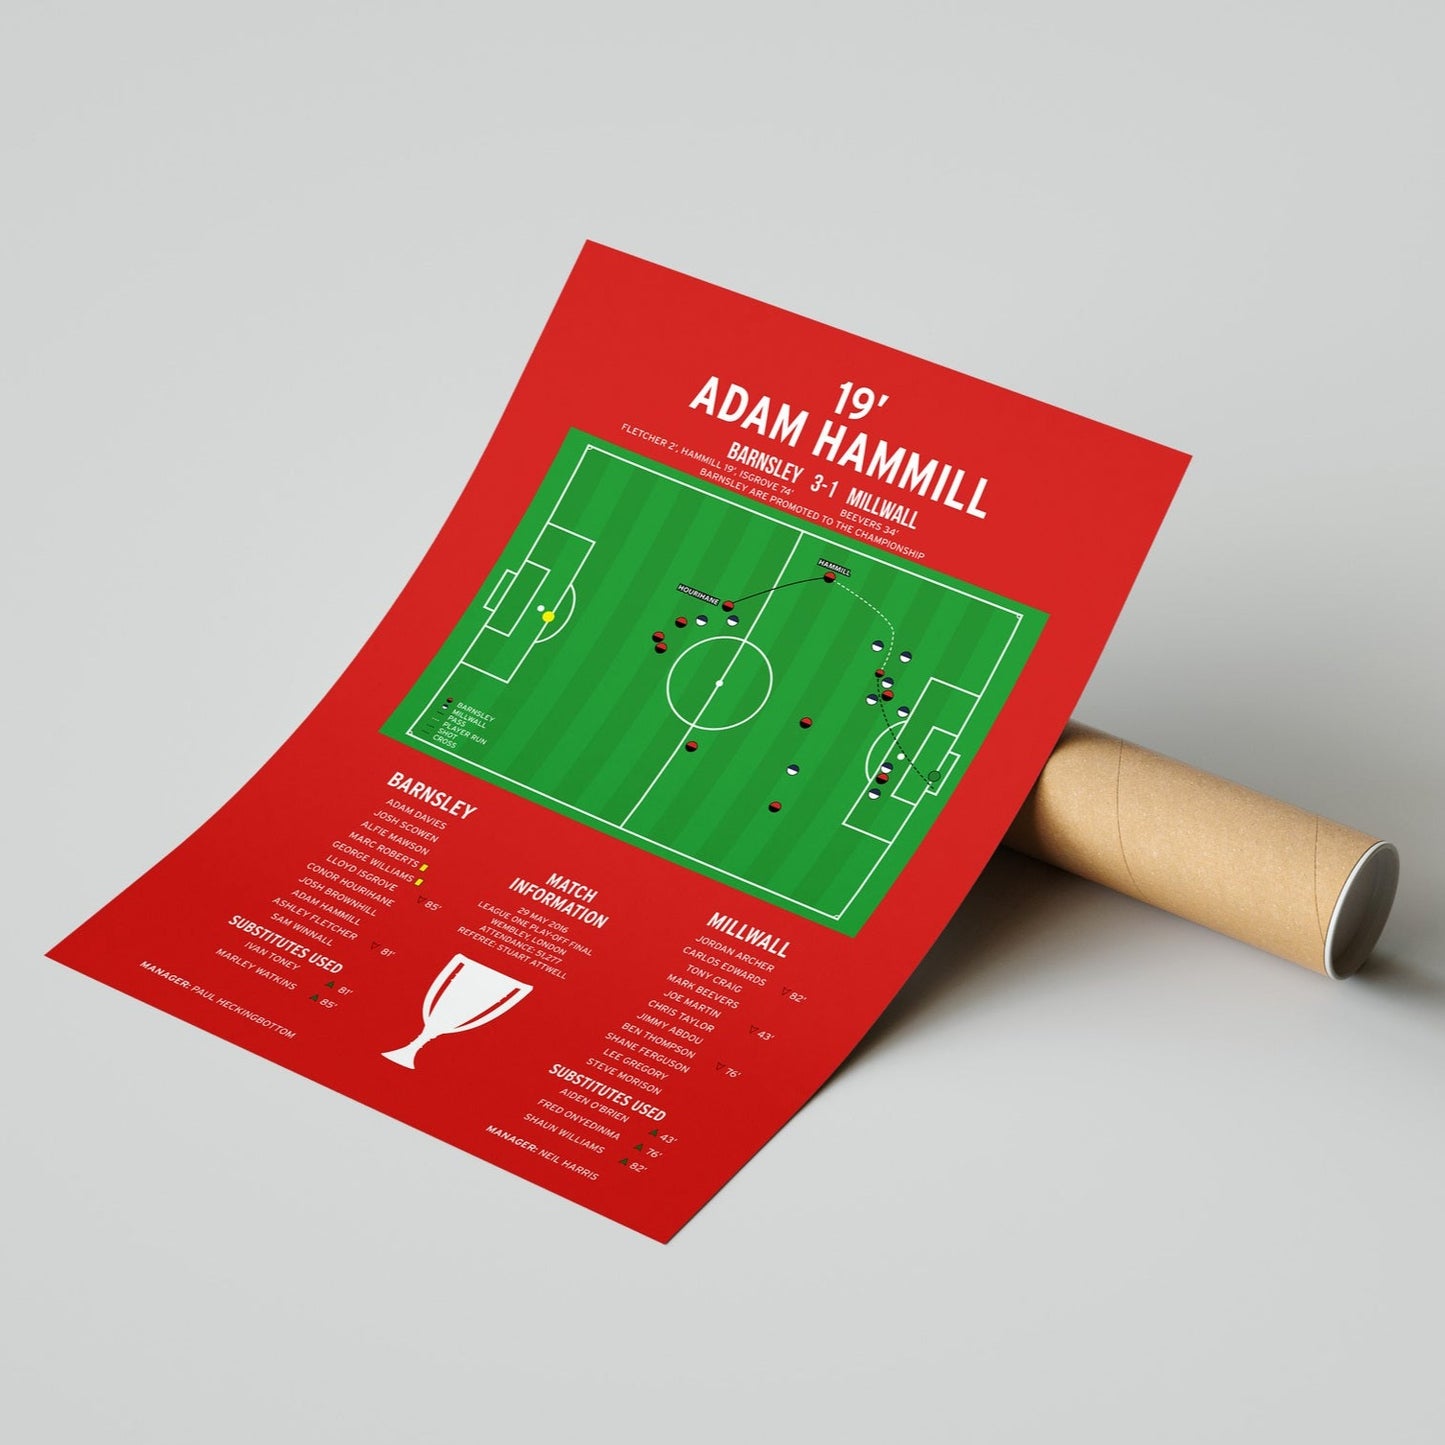 Adam Hammill Goal – Barnsley vs Millwall – League One Play-Off Final 2016